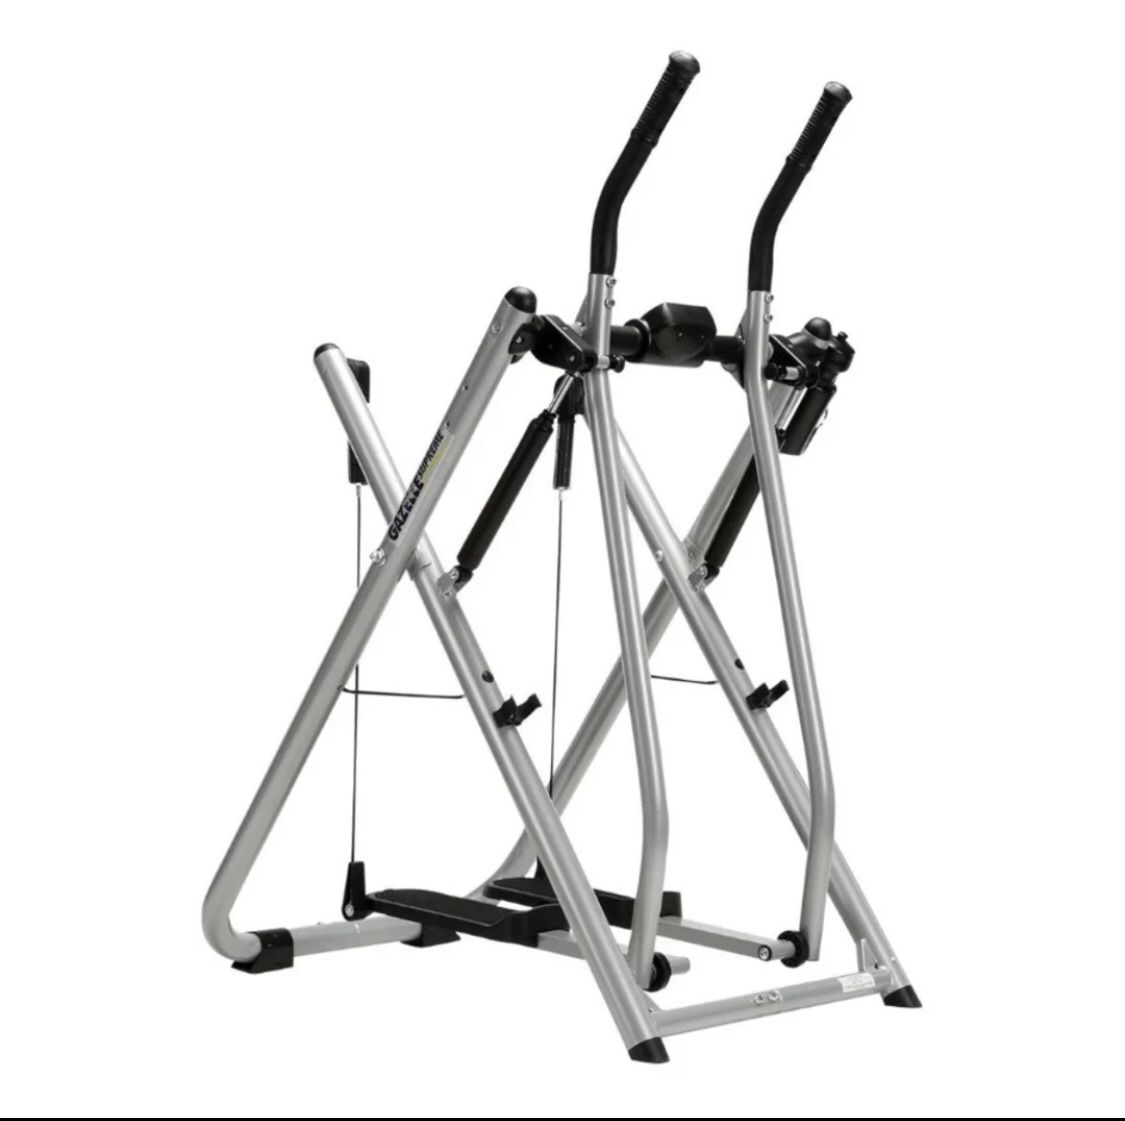 Gazelle Edge Slider home gym equipment